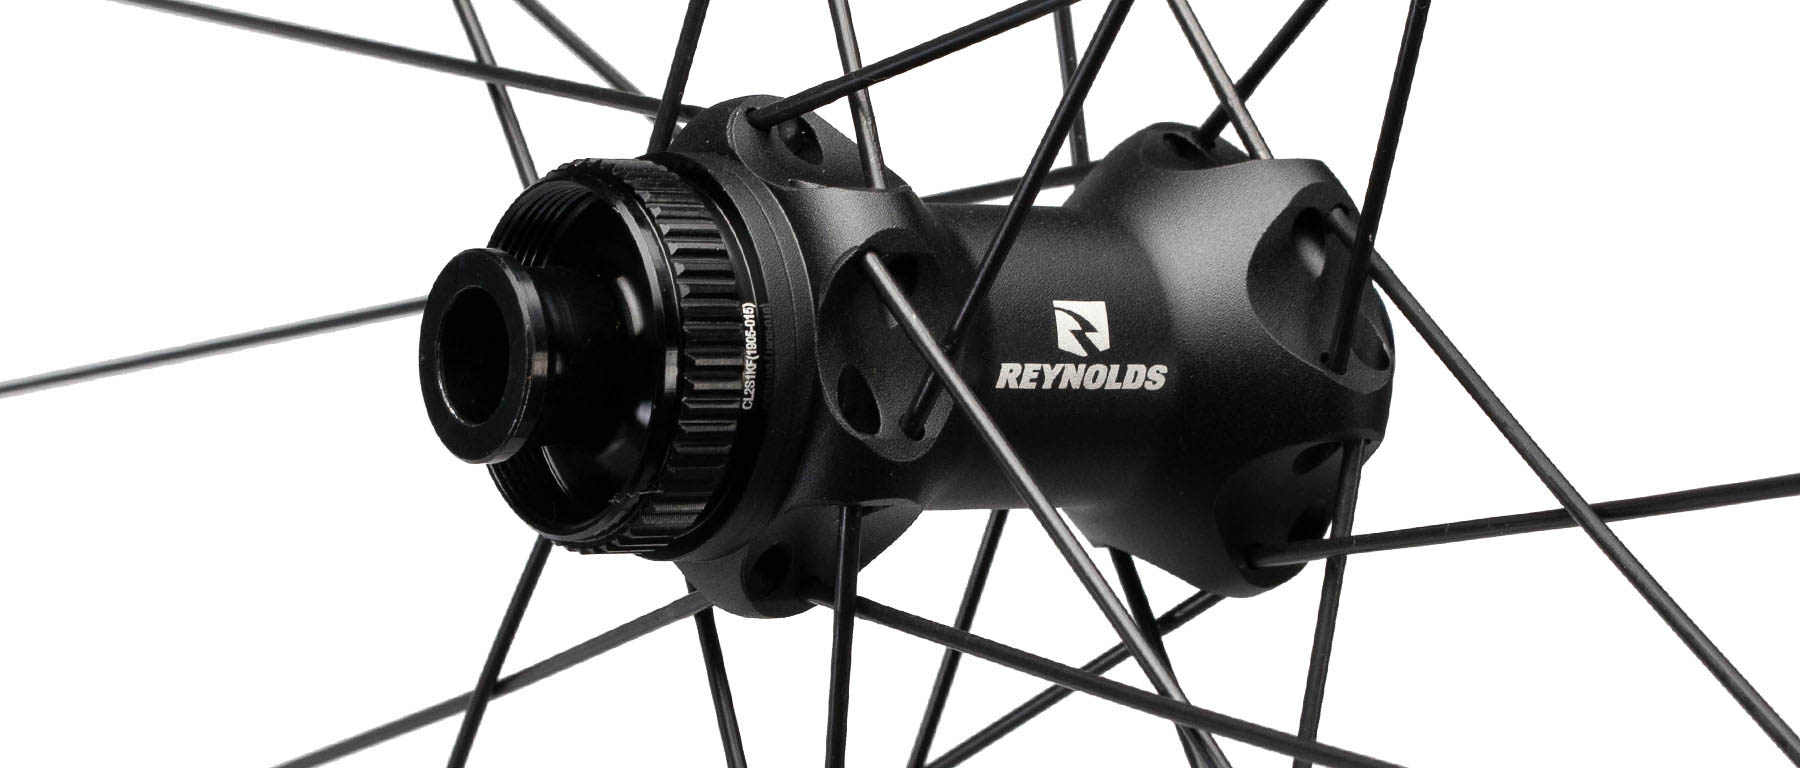 Reynolds ATR X Carbon Disc Wheelset